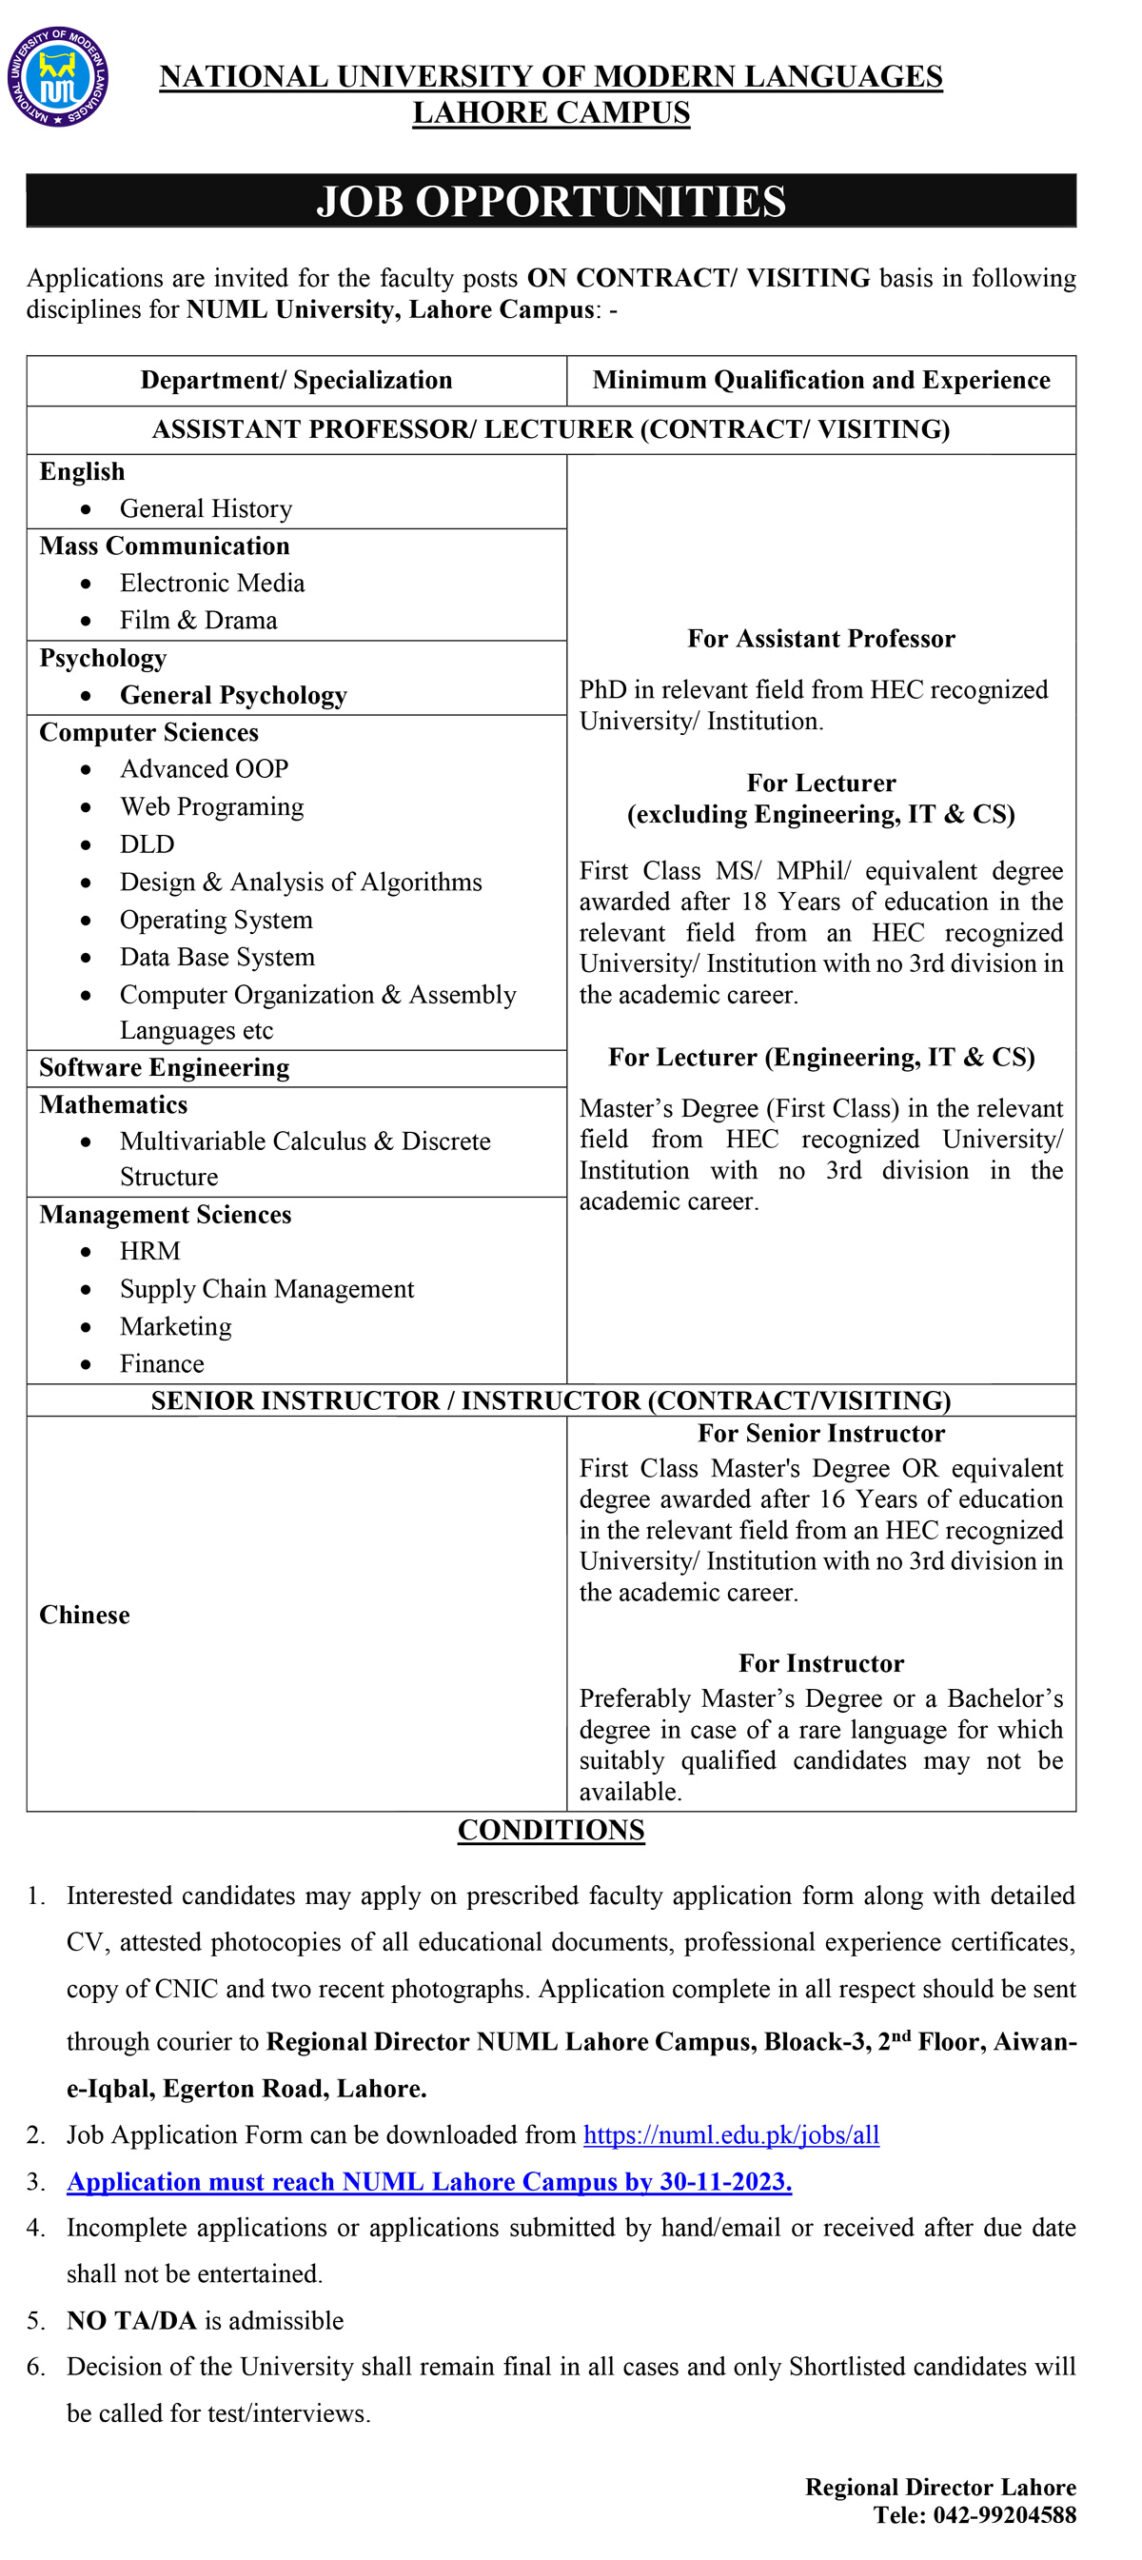 NUML Lahore Jobs 2023